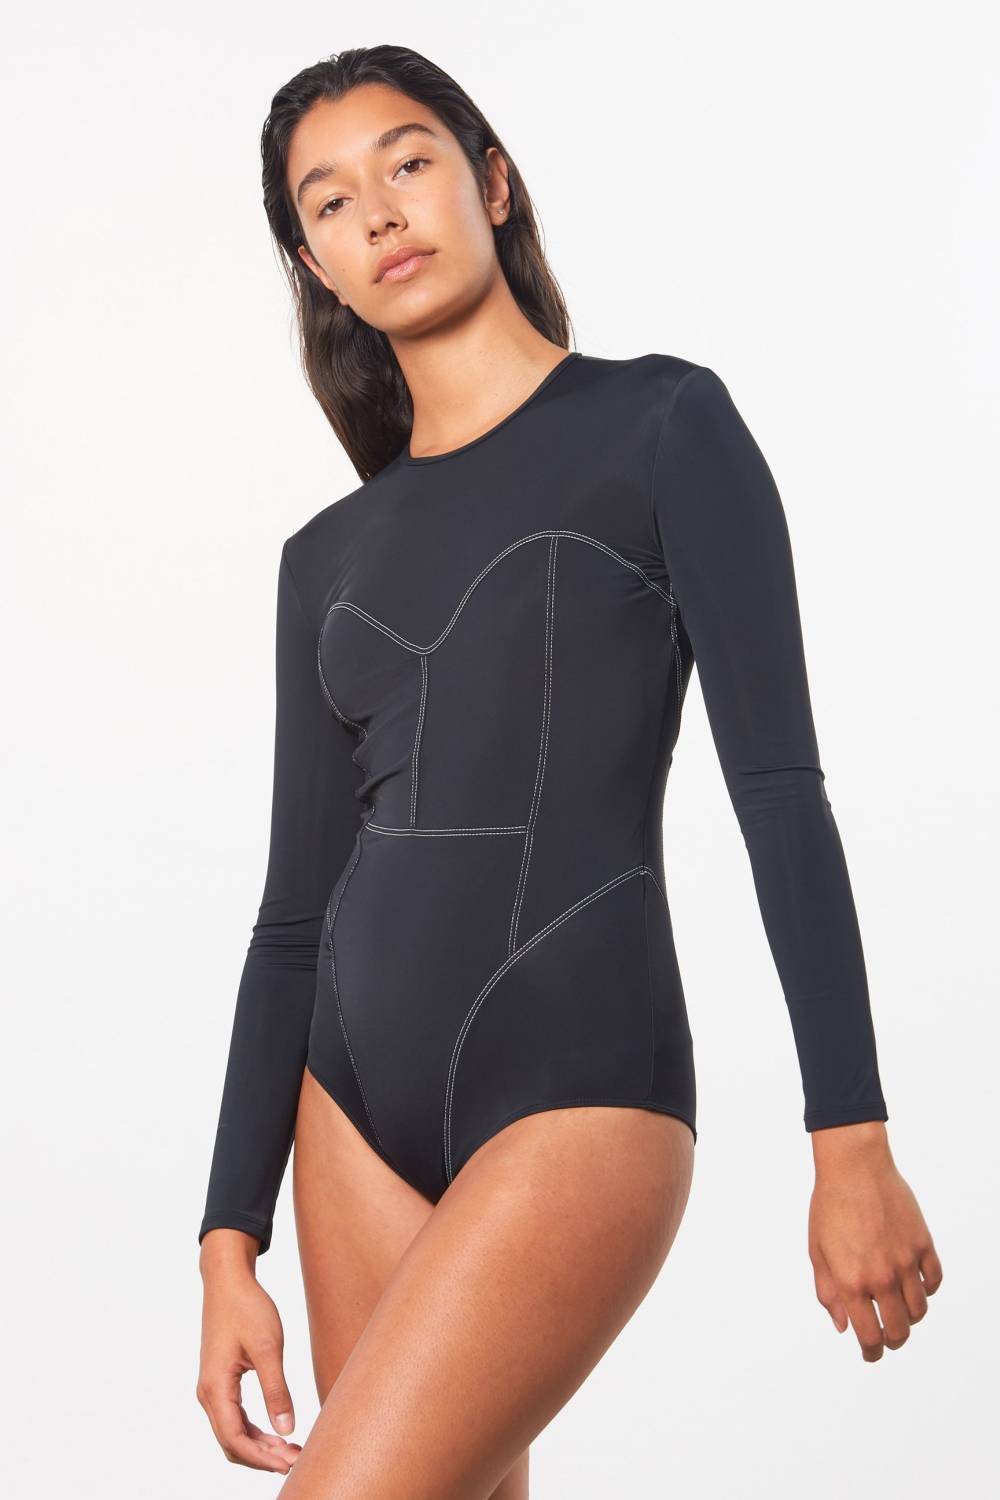 mara hoffman swimsuits minimalist basics